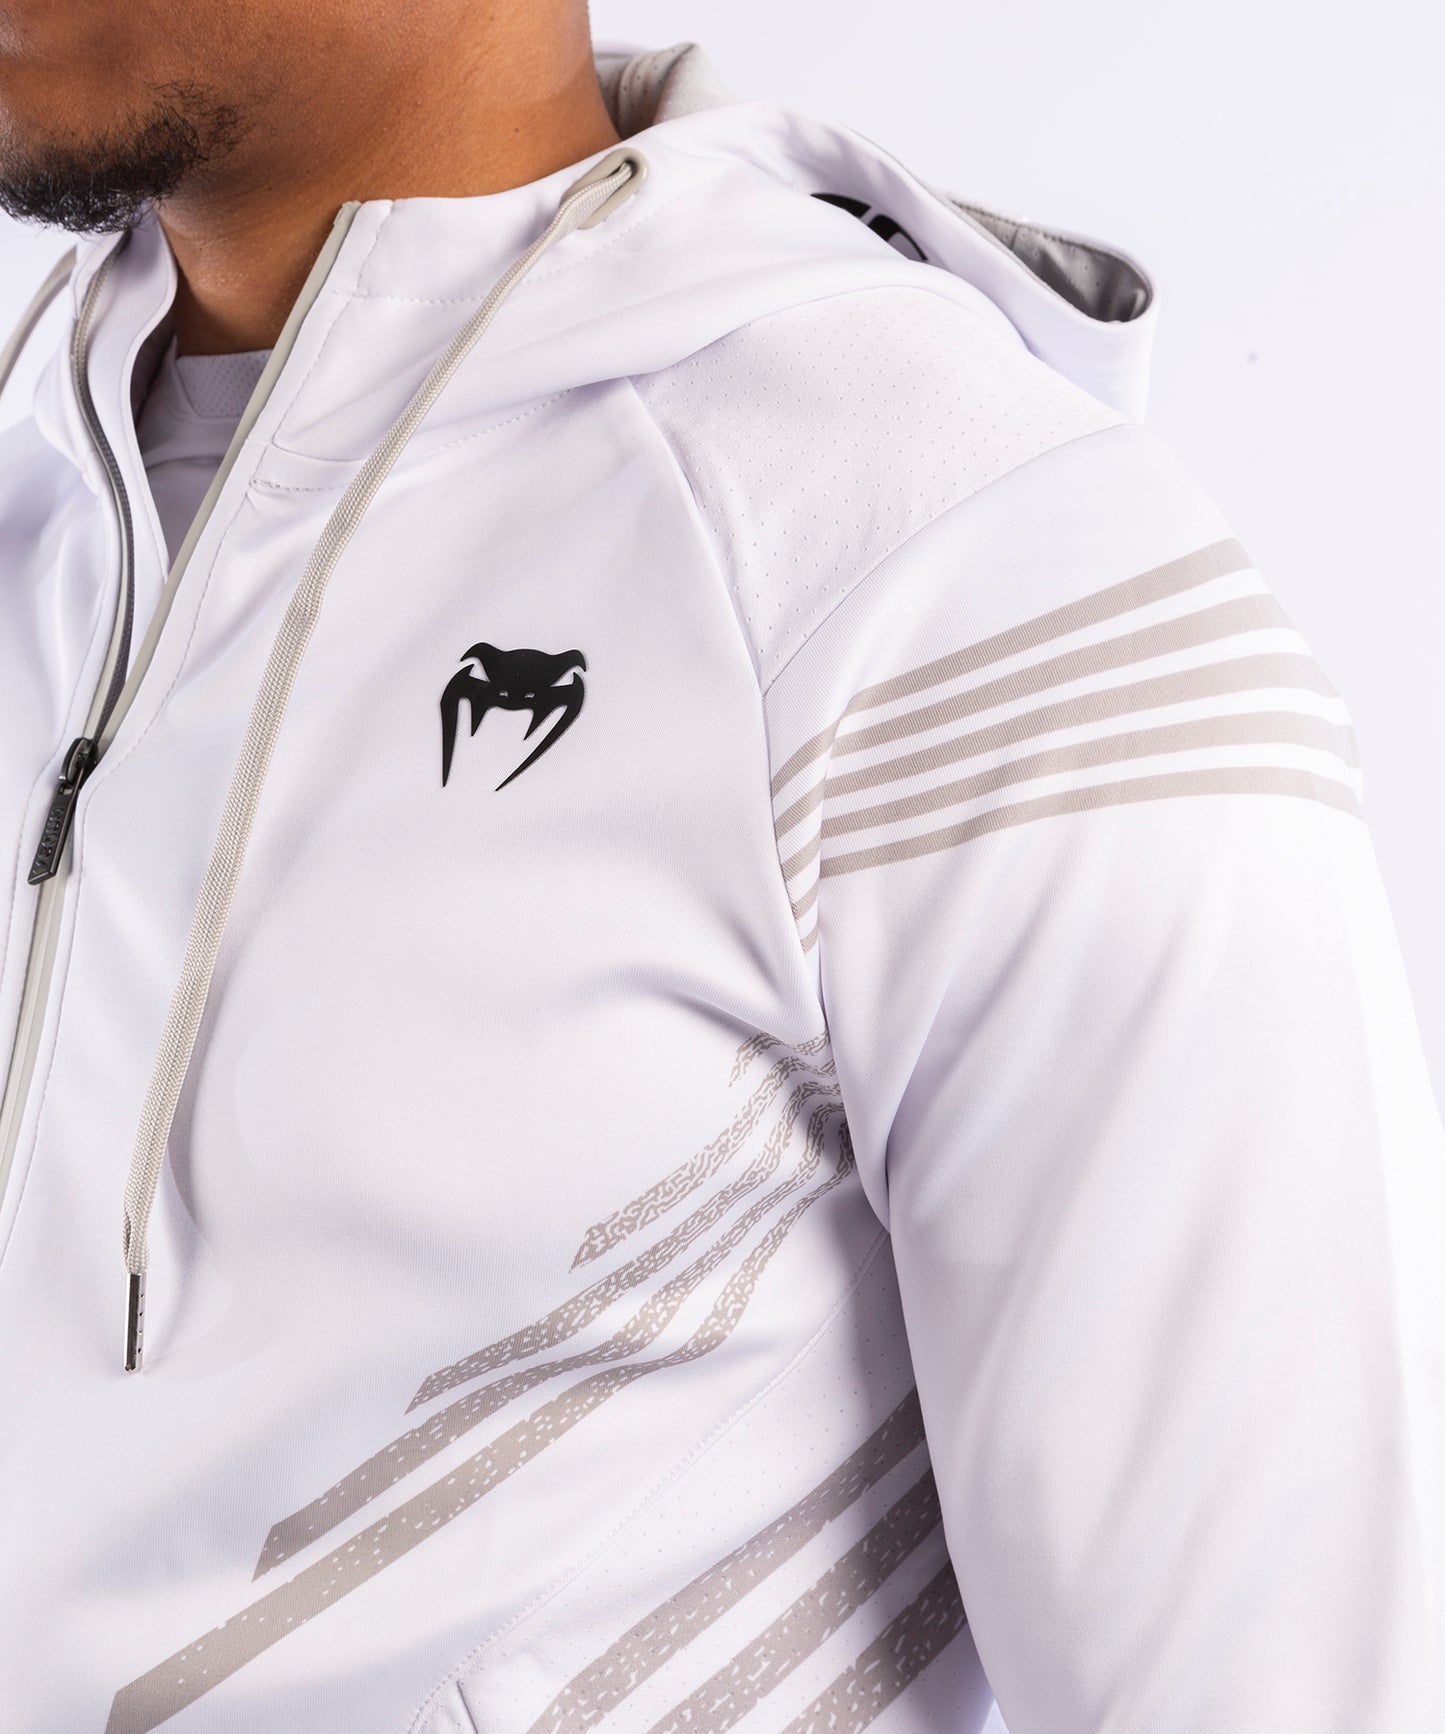 Sweatshirt Homme UFC Venum Pro Line - Blanc